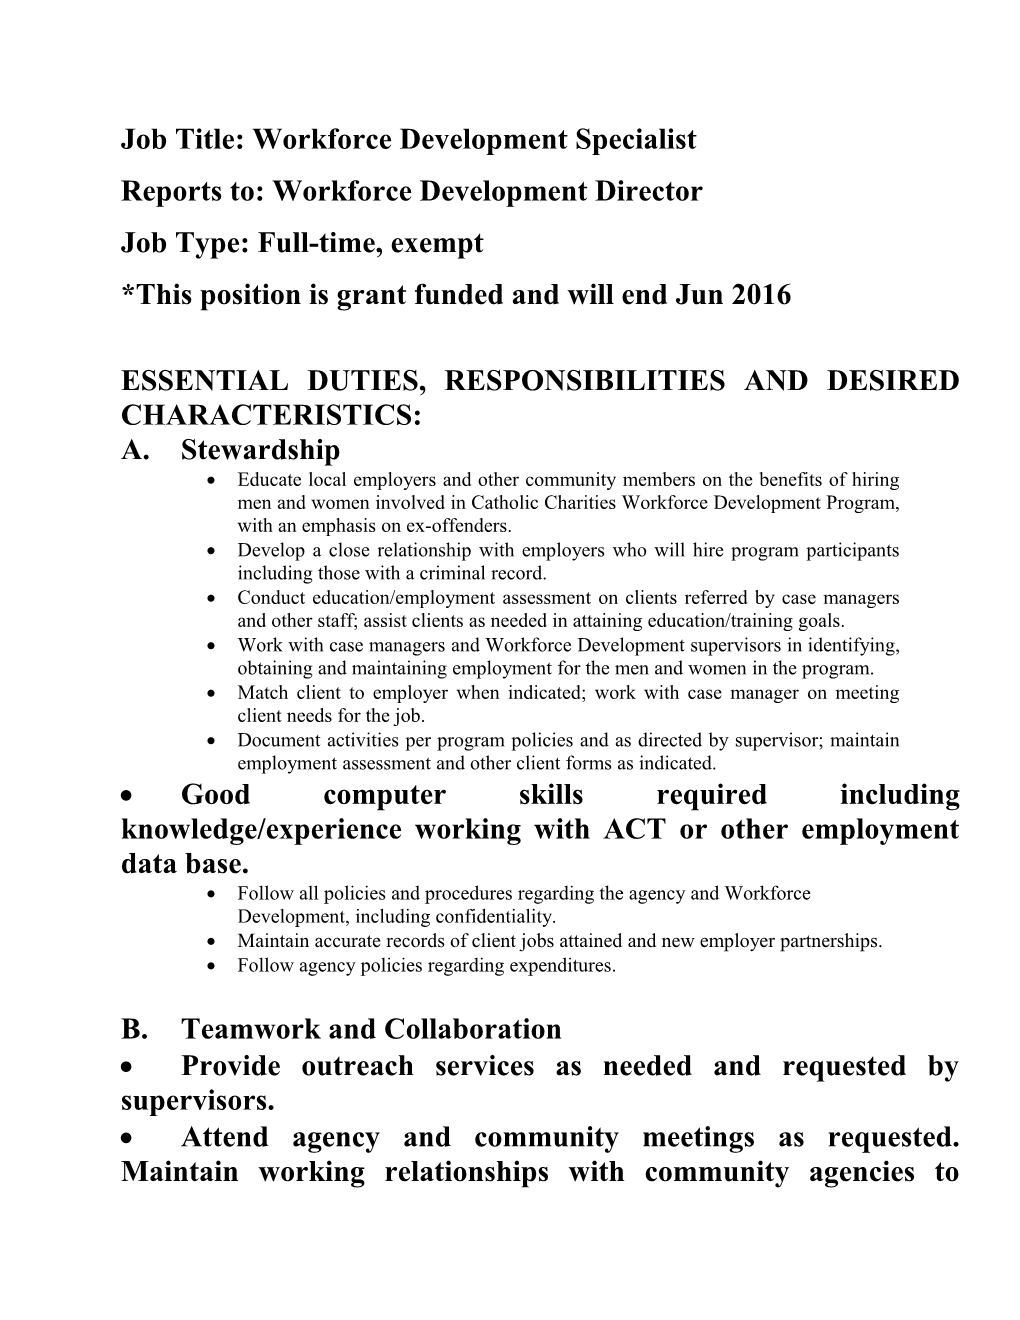 Job Title: Workforce Development Specialist